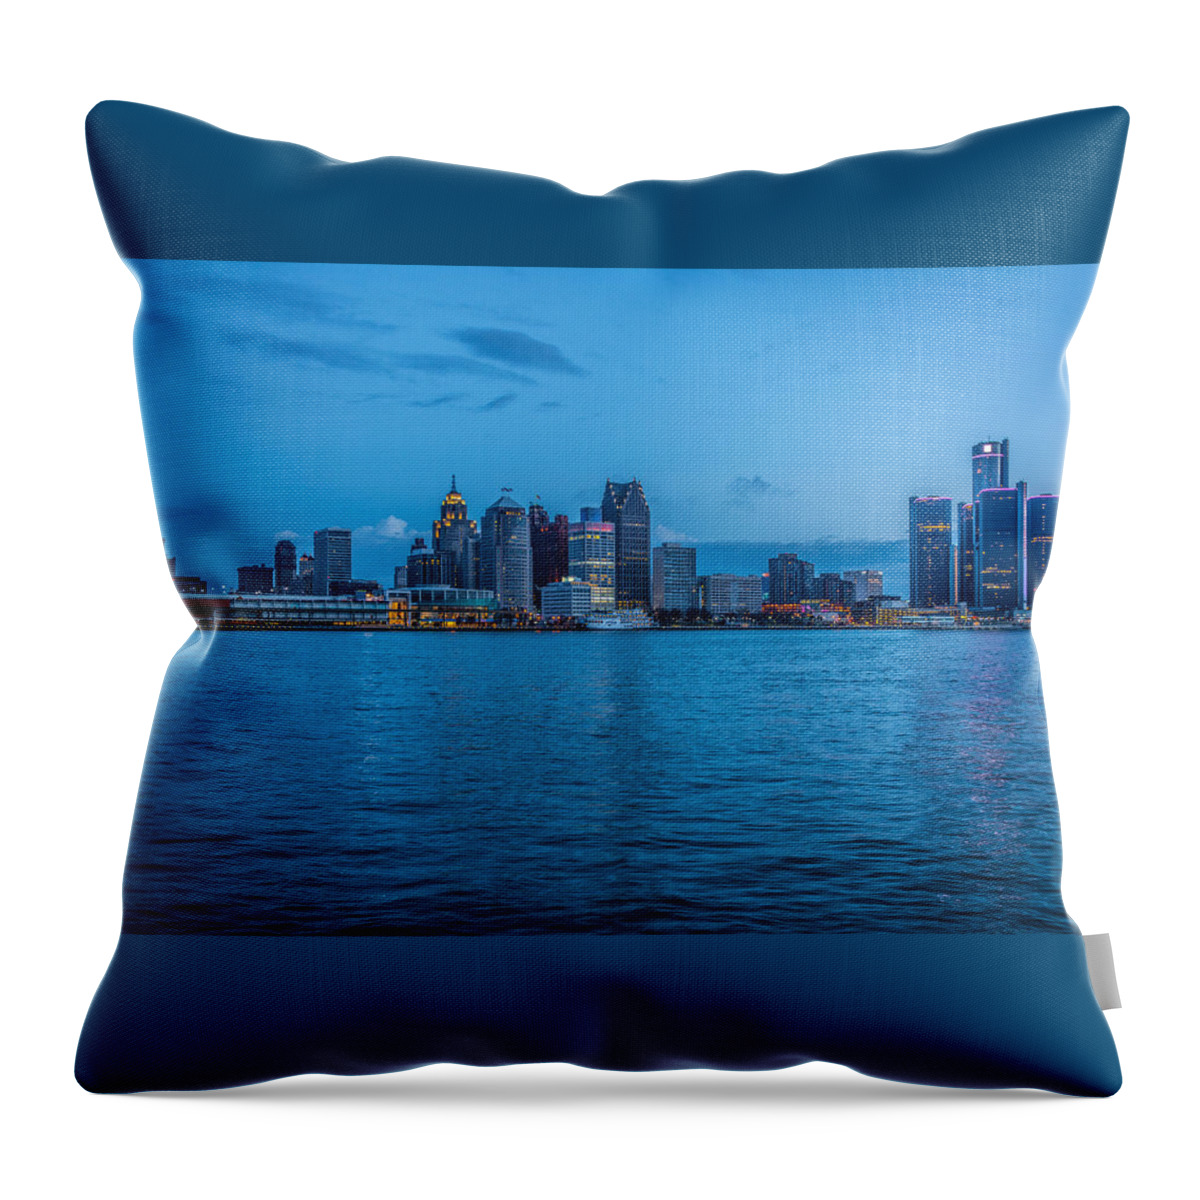 Detroit Throw Pillow featuring the photograph Detroit Skyline by Pravin Sitaraman